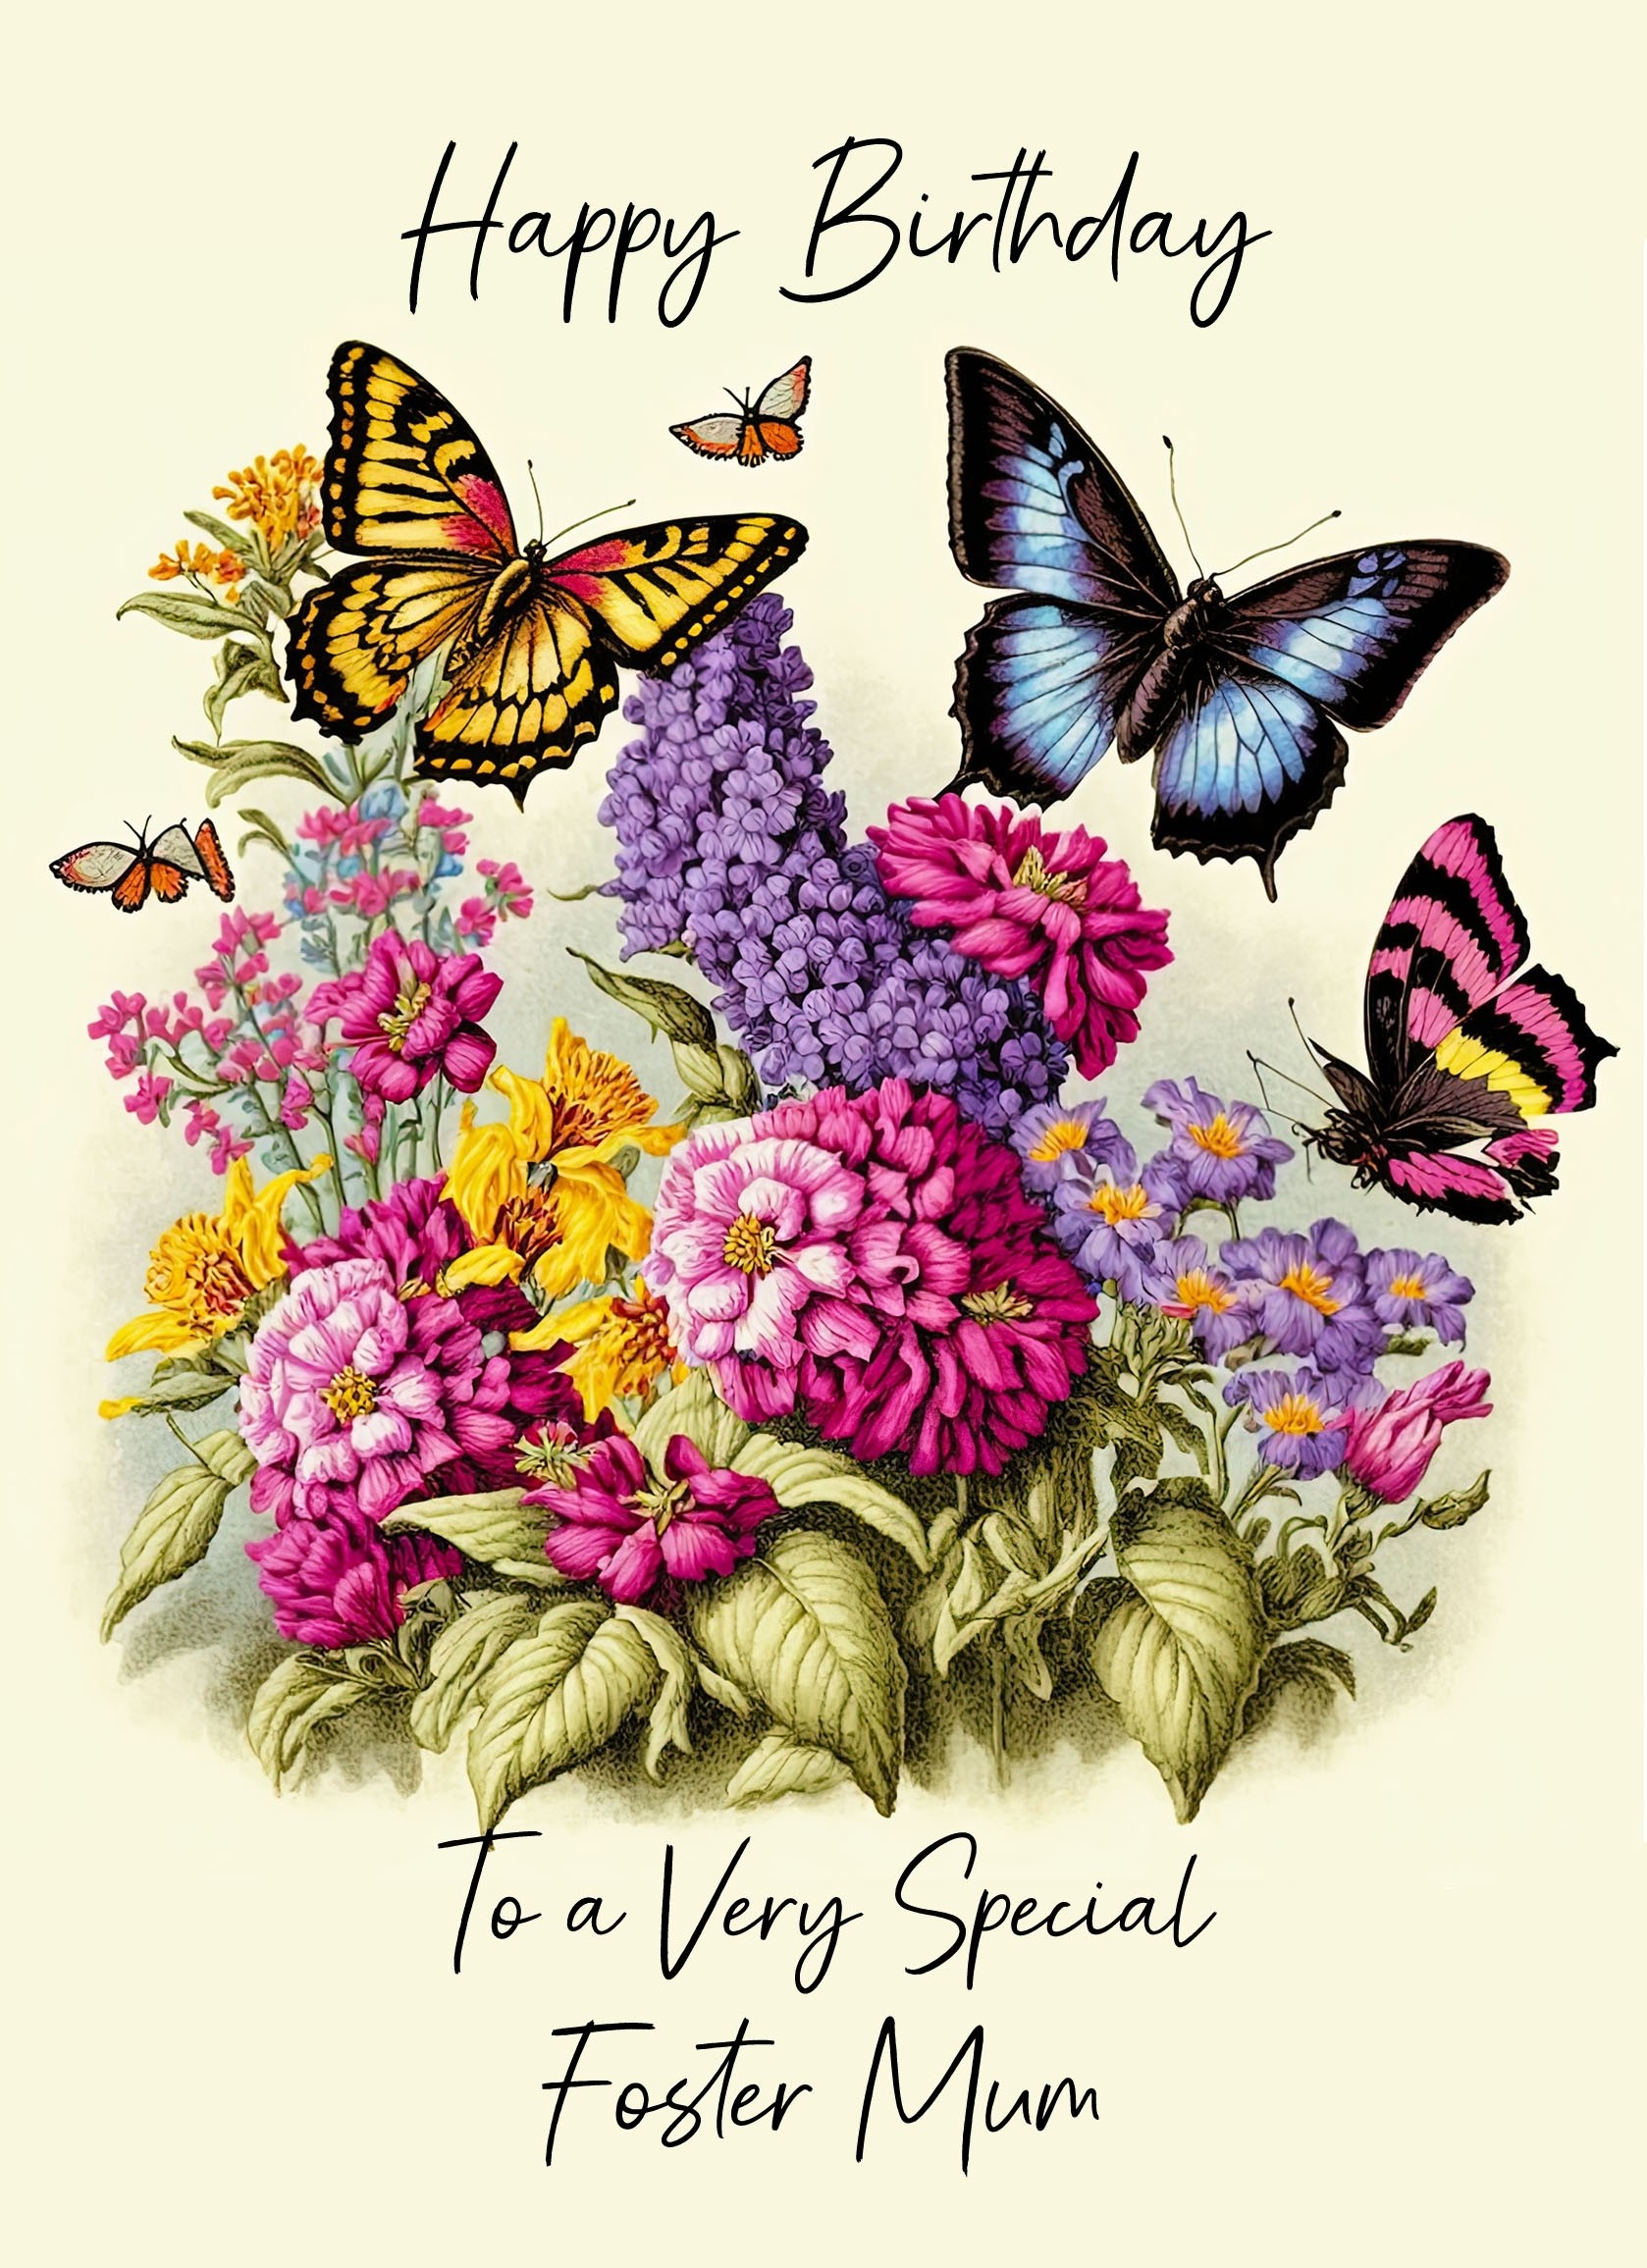 Butterfly Art Birthday Card For Foster Mum